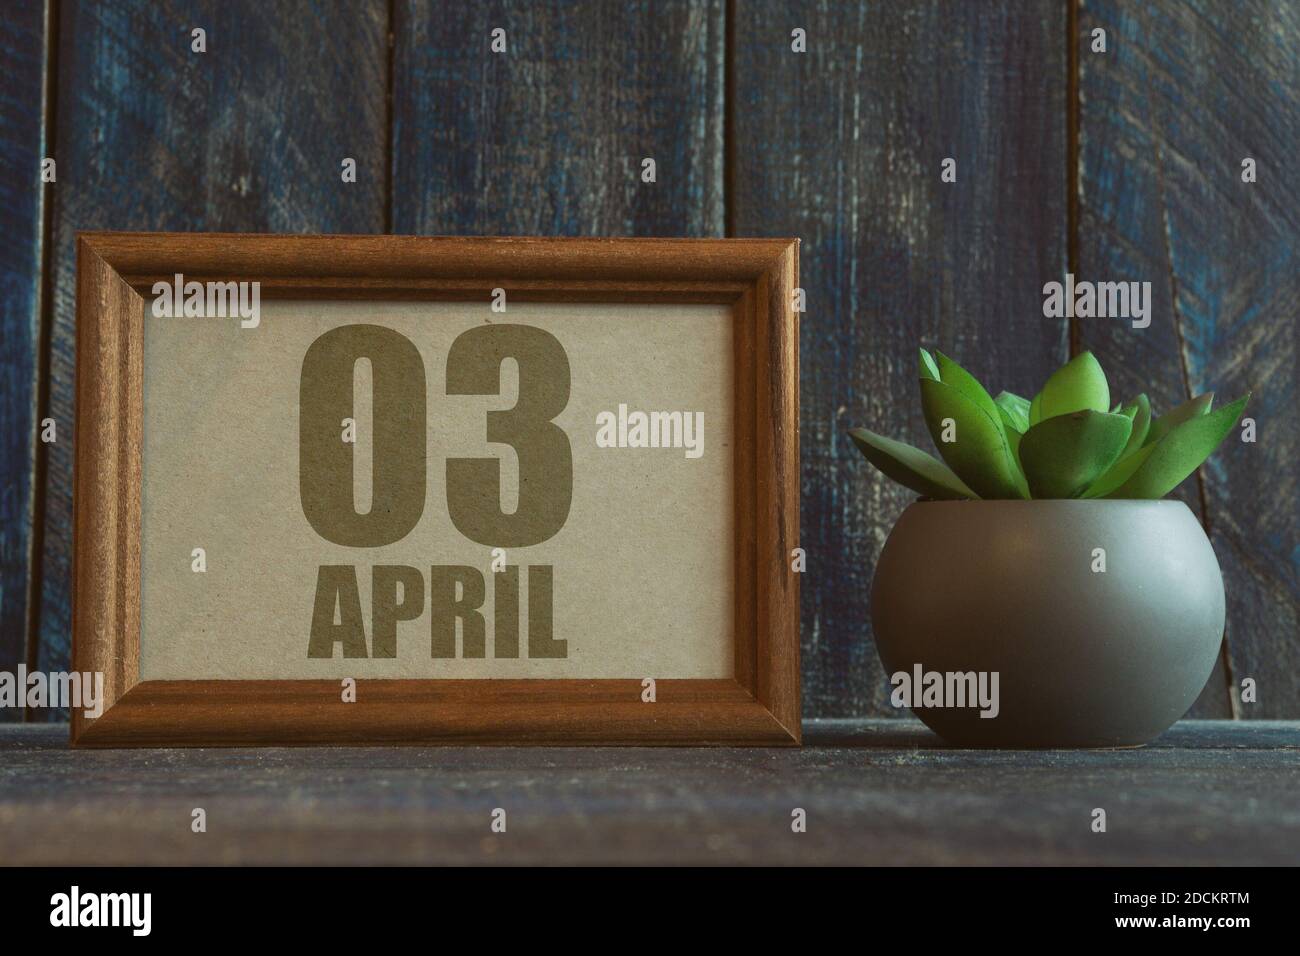 april. Tag 3 des Monats, Datum im Rahmen neben Sukkulente auf Holzhintergrund Frühlingsmonat, Tag des Jahres Konzept. Stockfoto